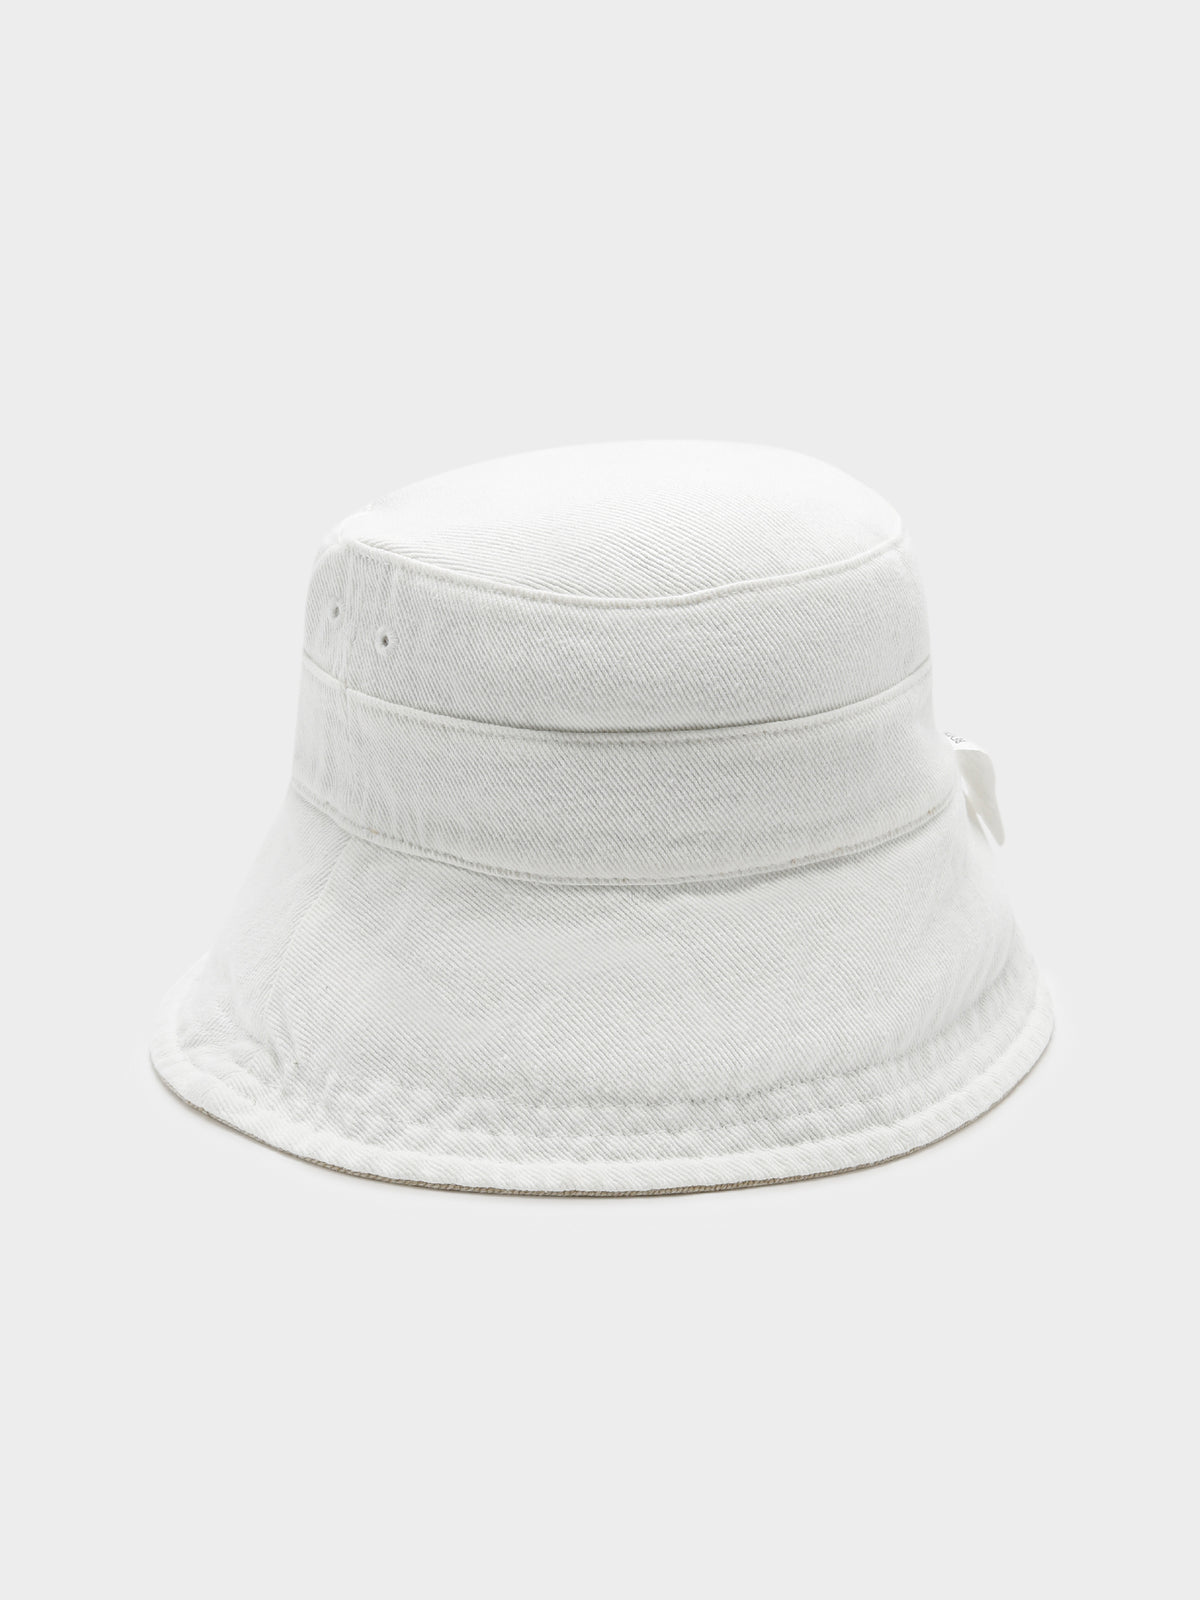 Reversible Sun Hat in Latte Beige &amp; White